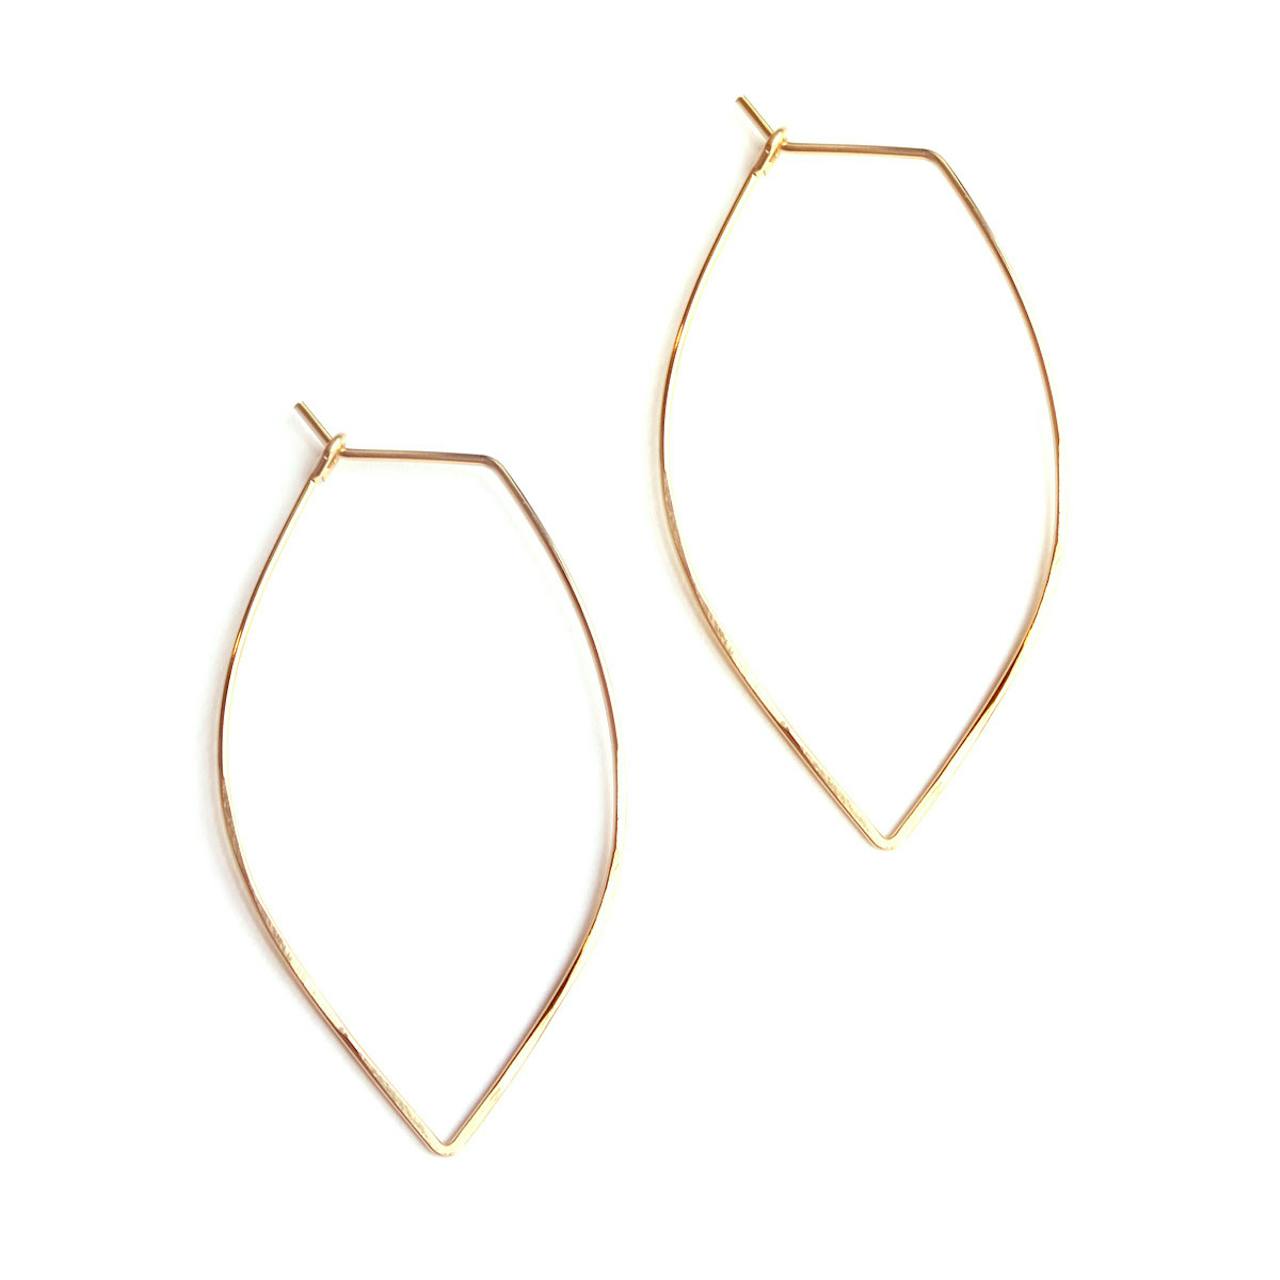 April Soderstrom Small Leaf Earrings - Gold